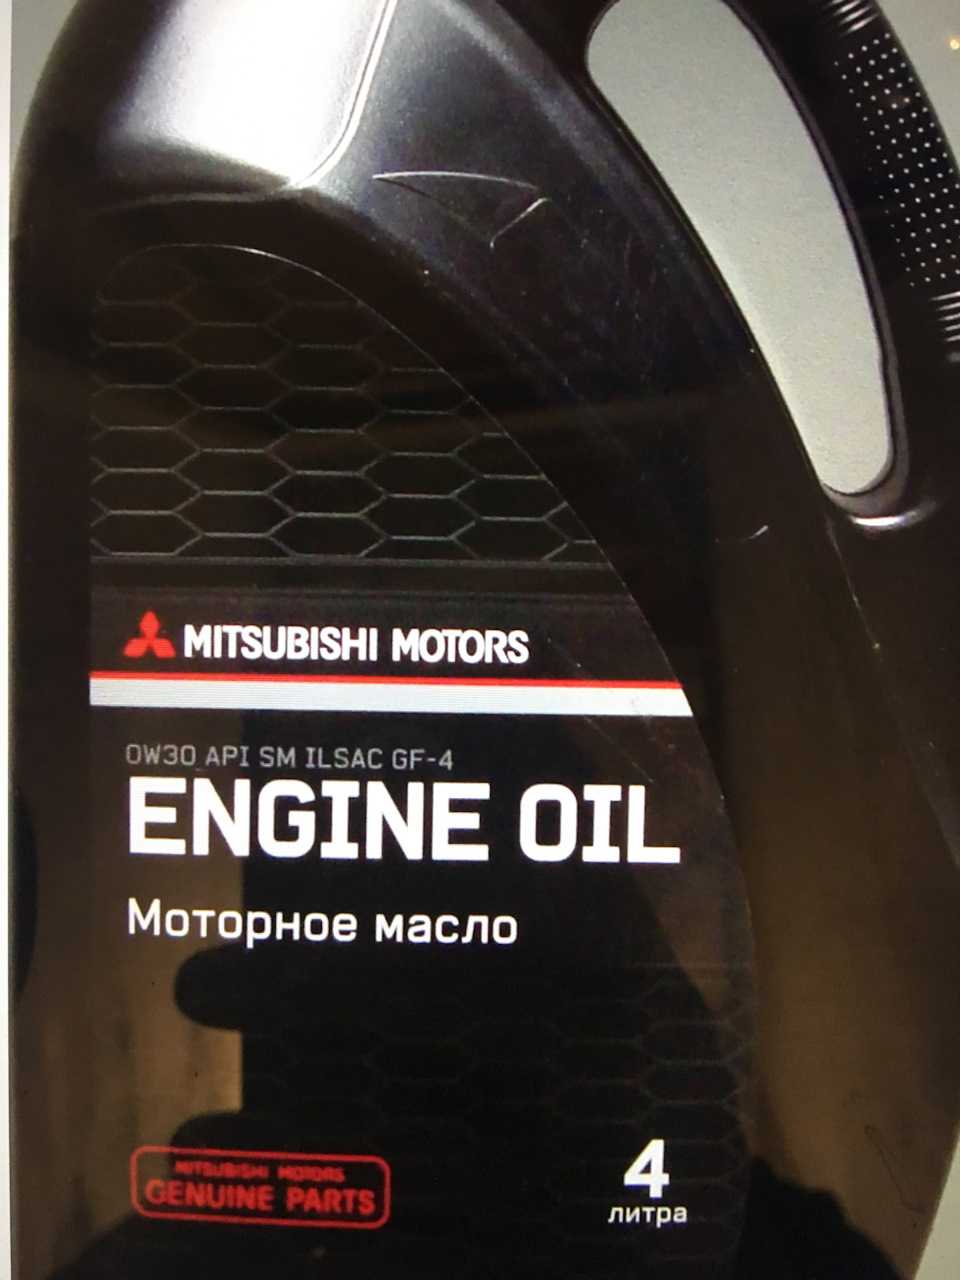 Характеристики моторного масла 0w-30 и расшифровка вязкости